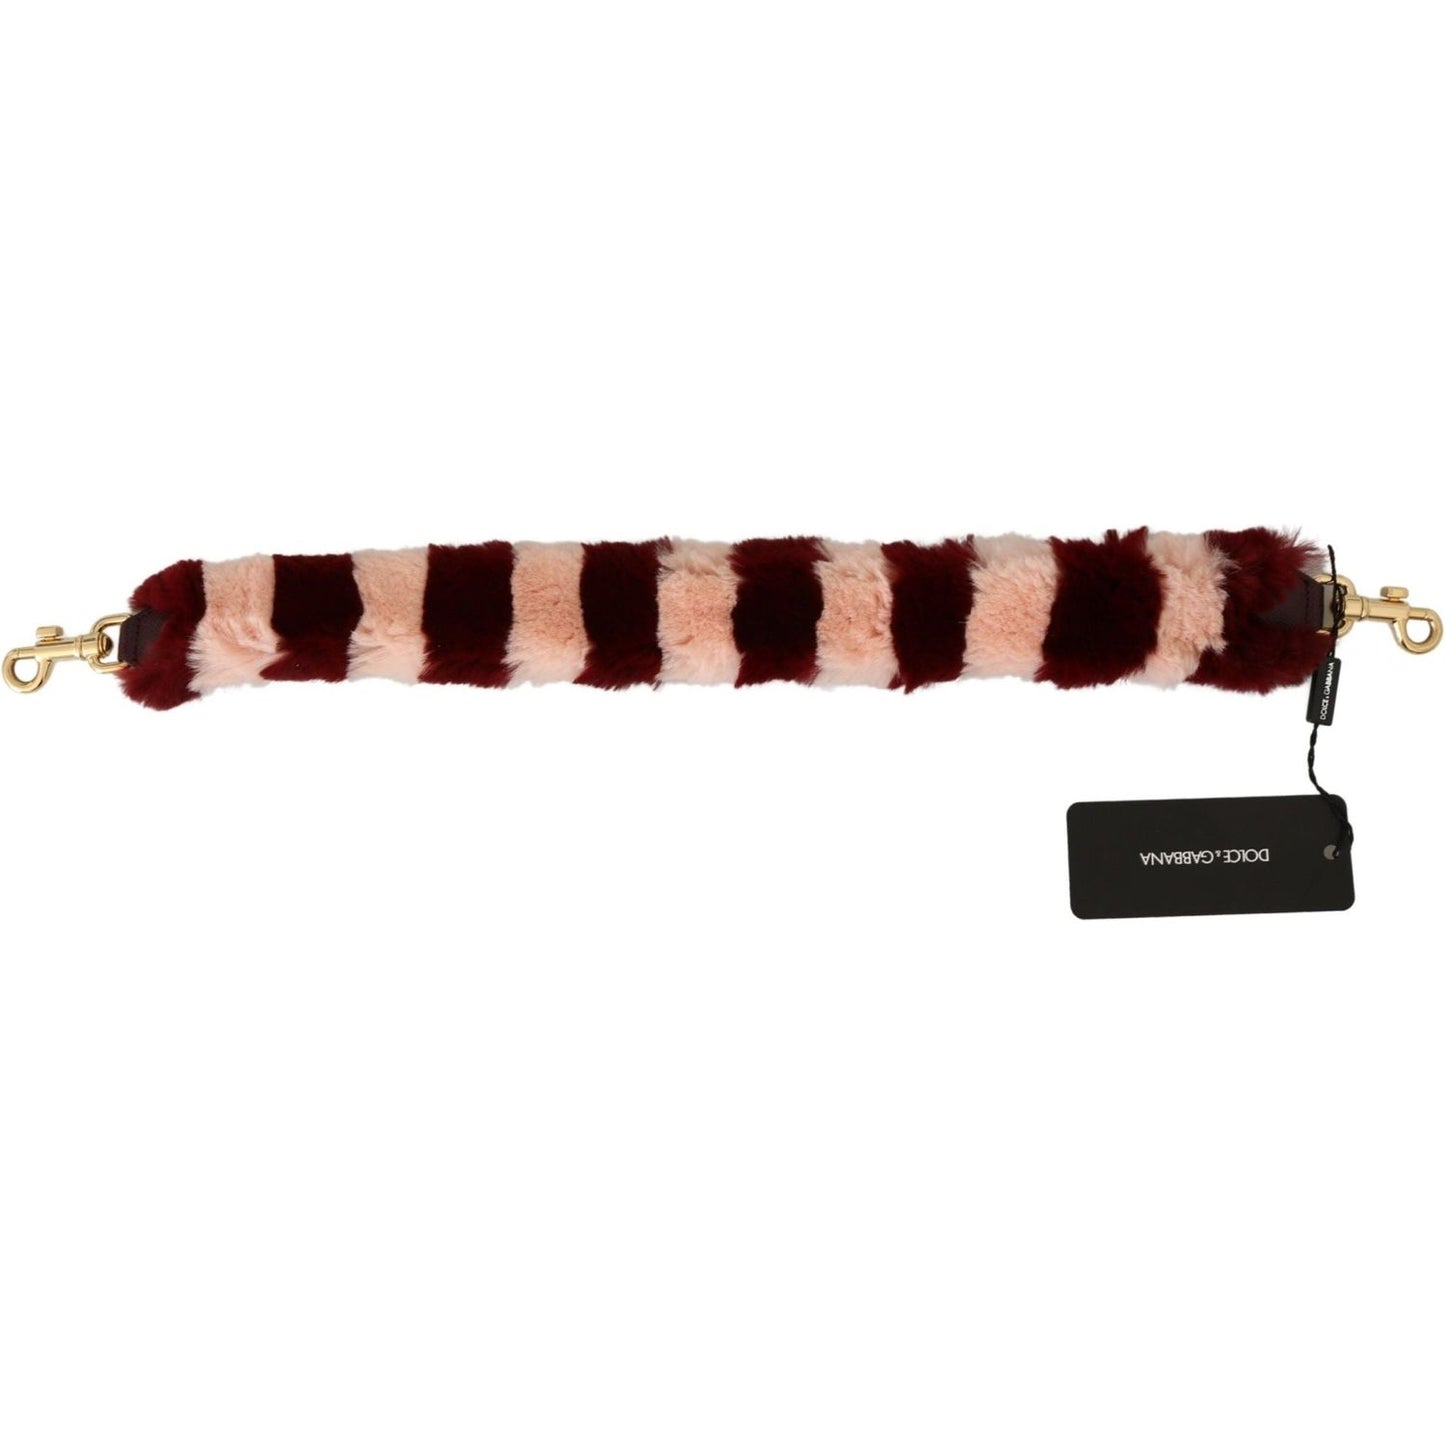 Dolce & Gabbana Bordeaux Pink Fur Shoulder Strap Luxury Accessory pink-red-lapin-fur-accessory-shoulder-strap